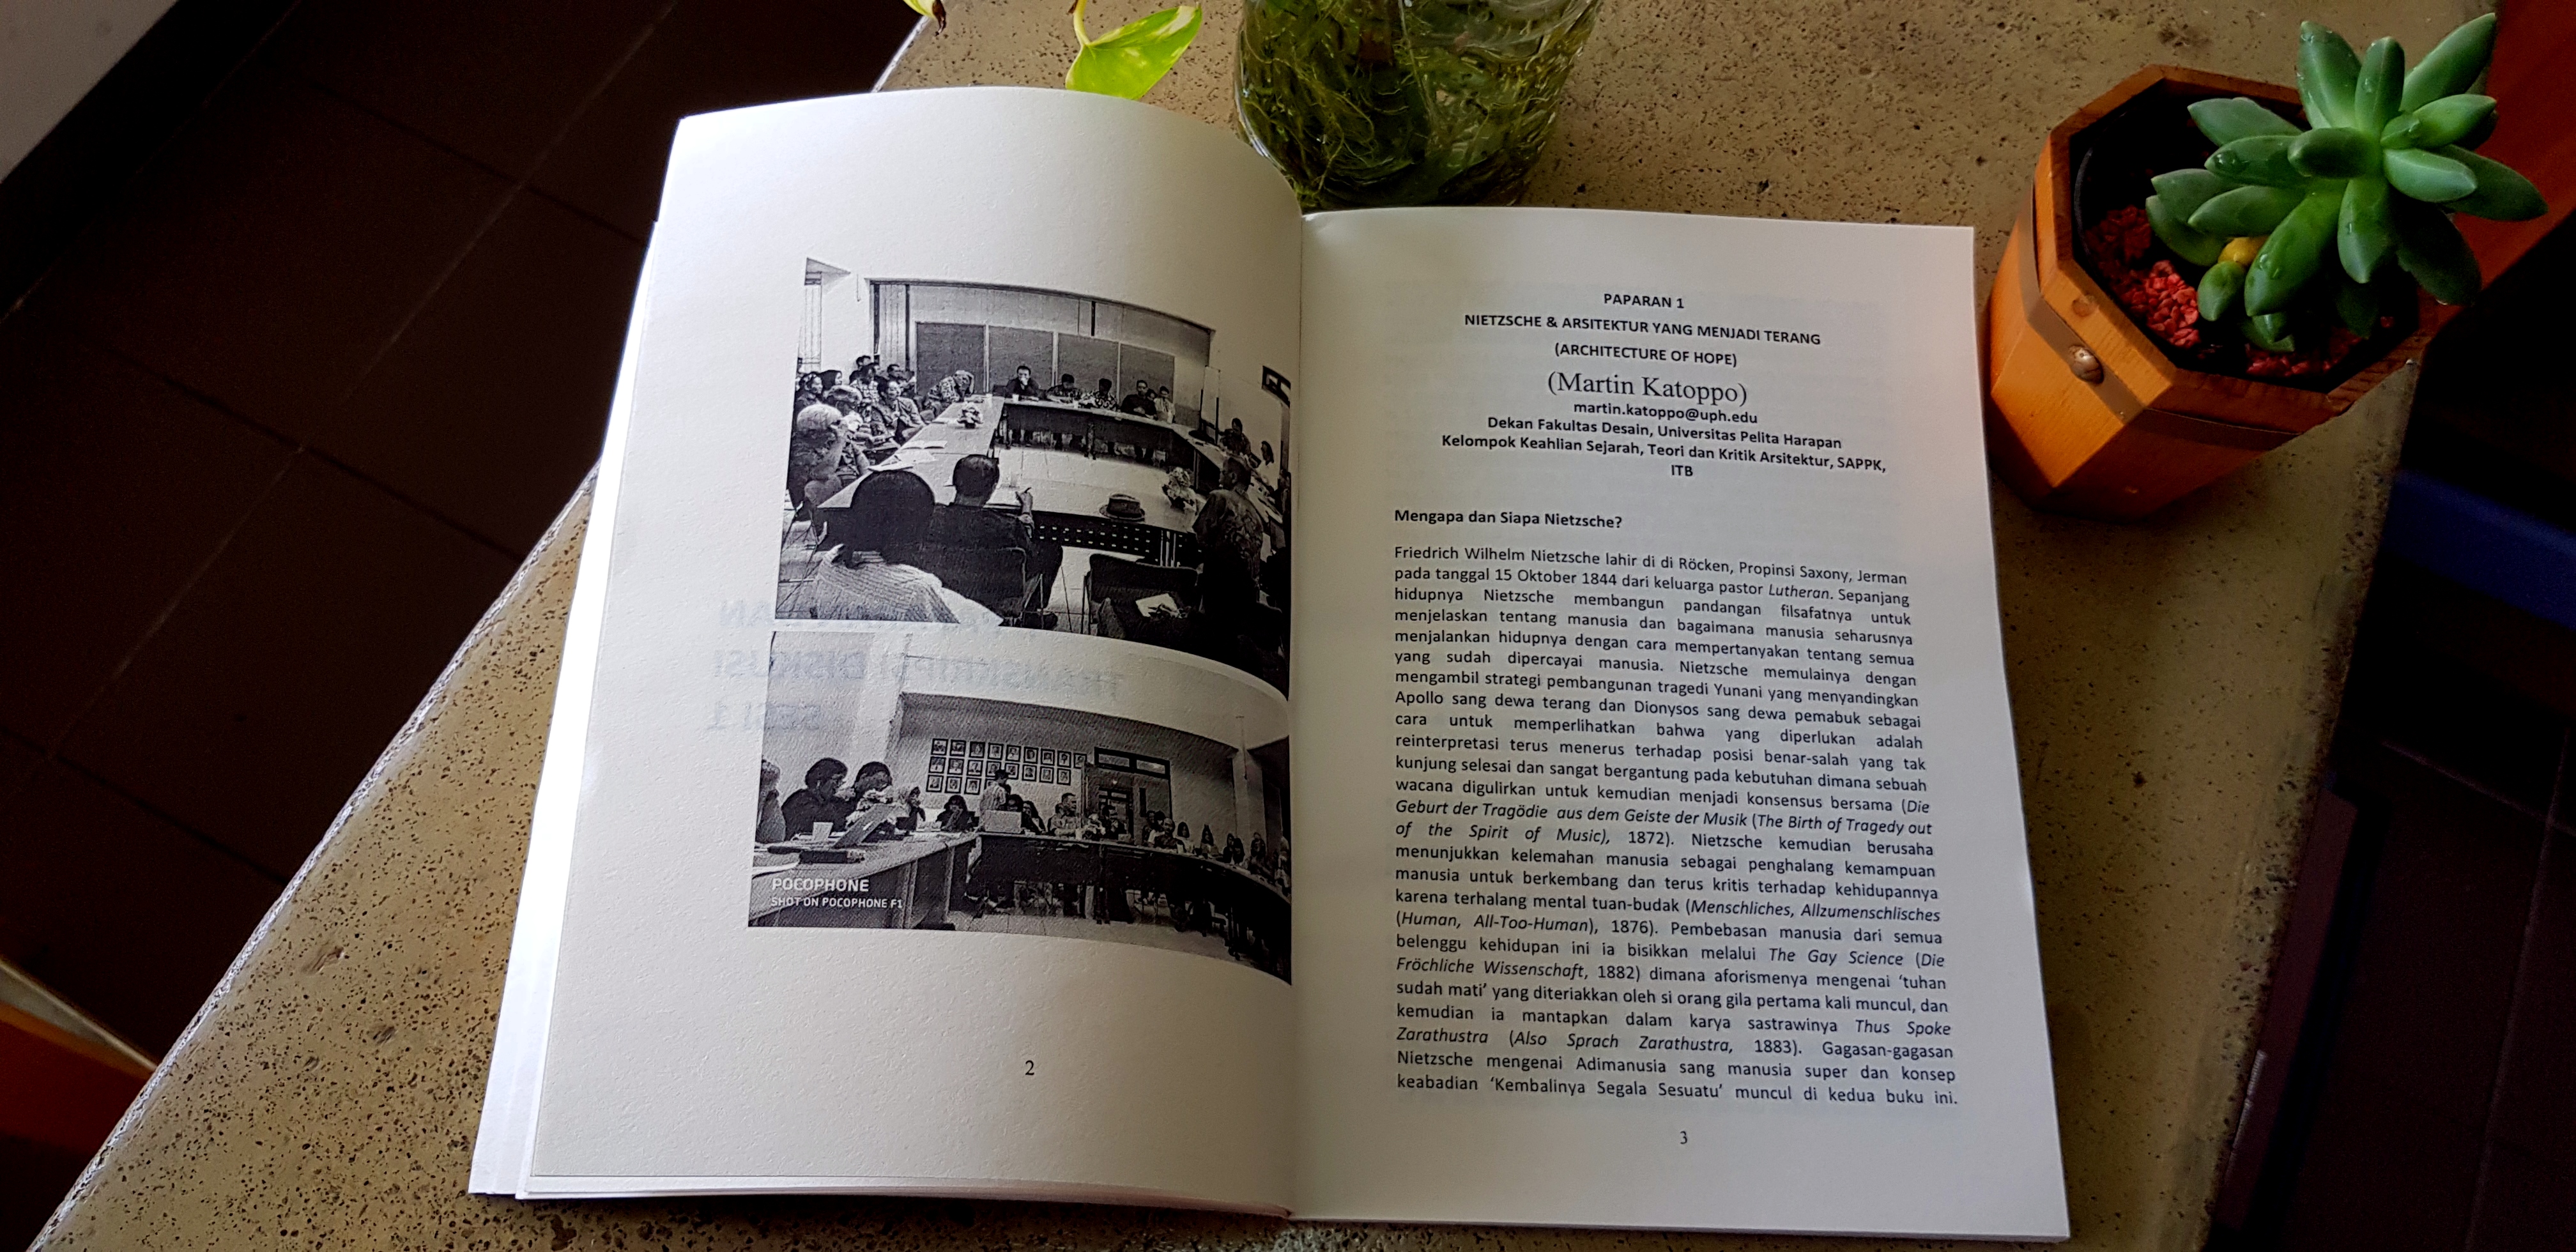 Publikasi Buku: Arsitektur dan Filosofi serta buku: Monografi Foto Eko Purwono, Kelompok Keahlian Sejarah, Teori dan Kritik Arsitektur